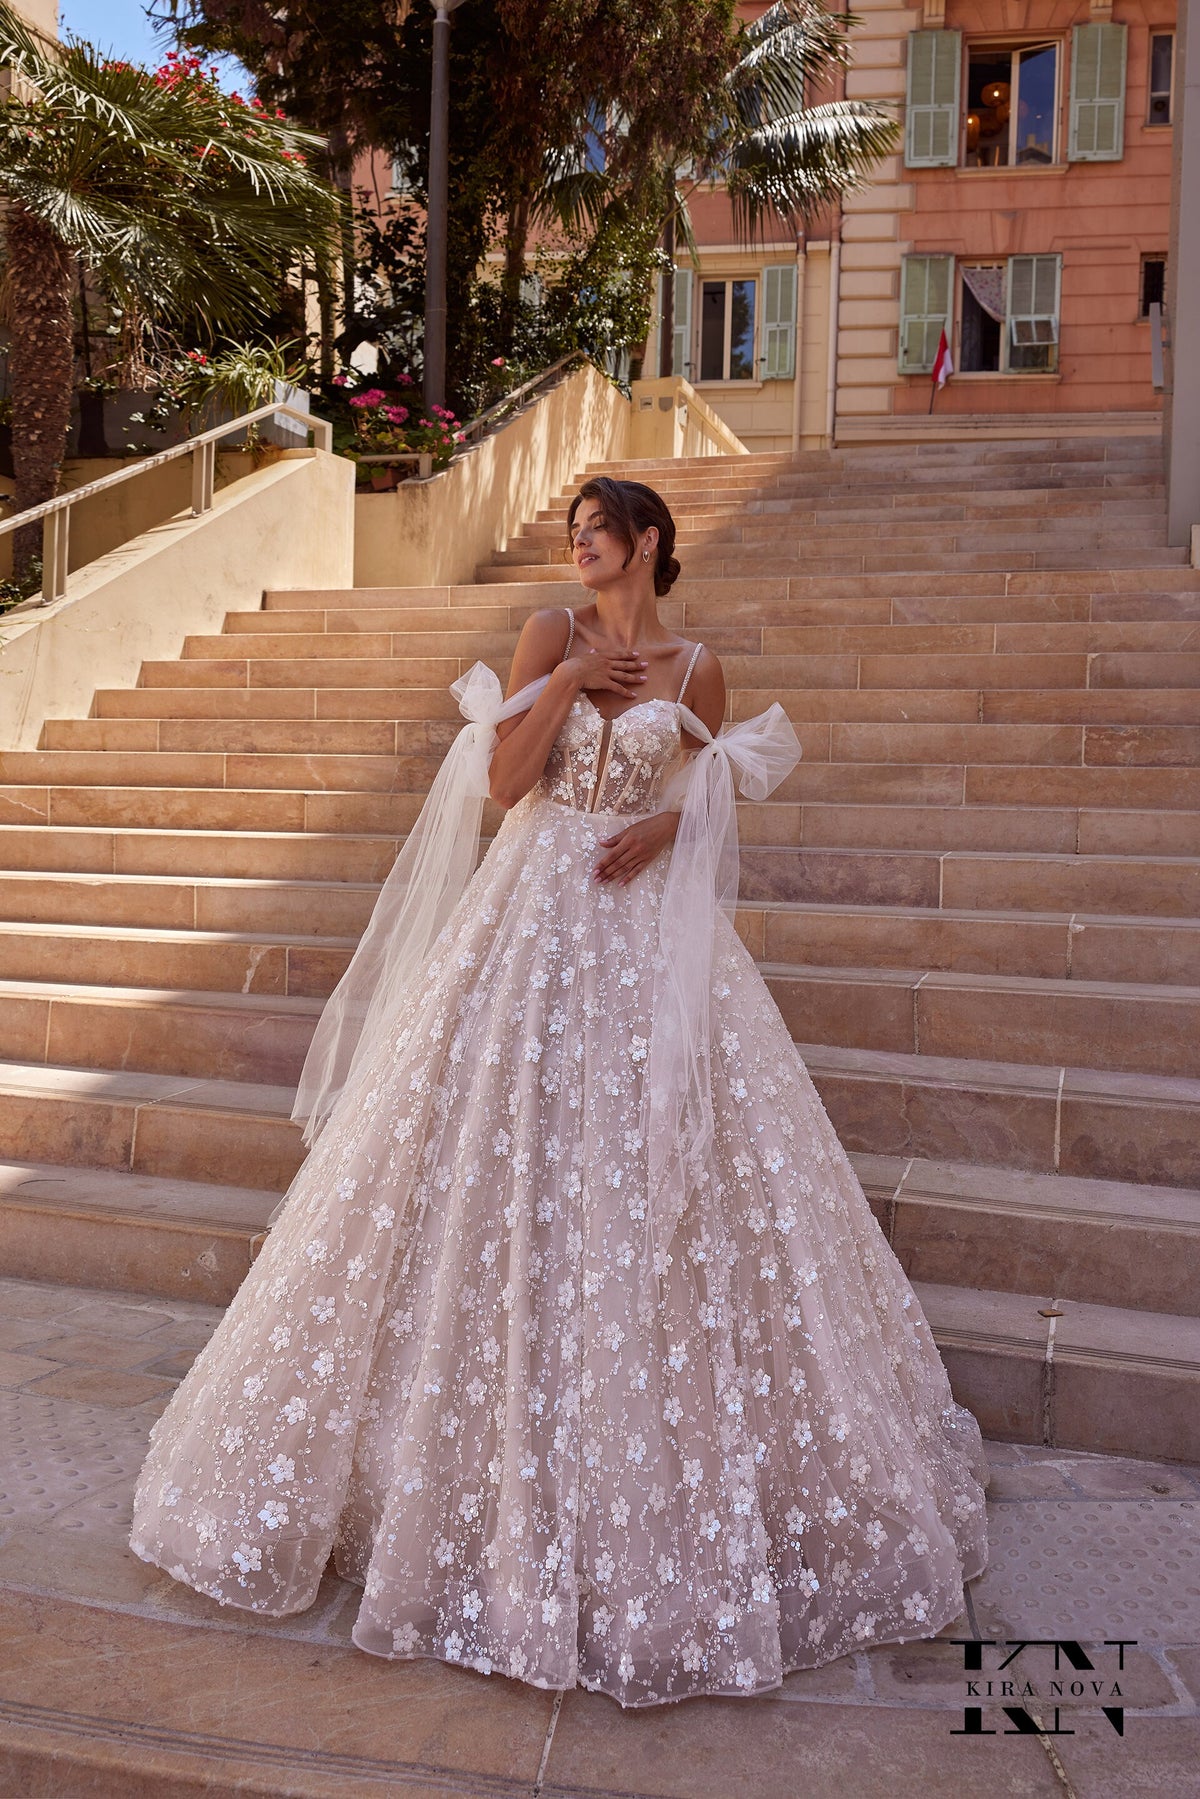 Off The Shoulder Romantic Sleeveless Straps Wedding Dress Bridal Gown Aline Floral Unique Design Open Back Full Skirt Short Train Style